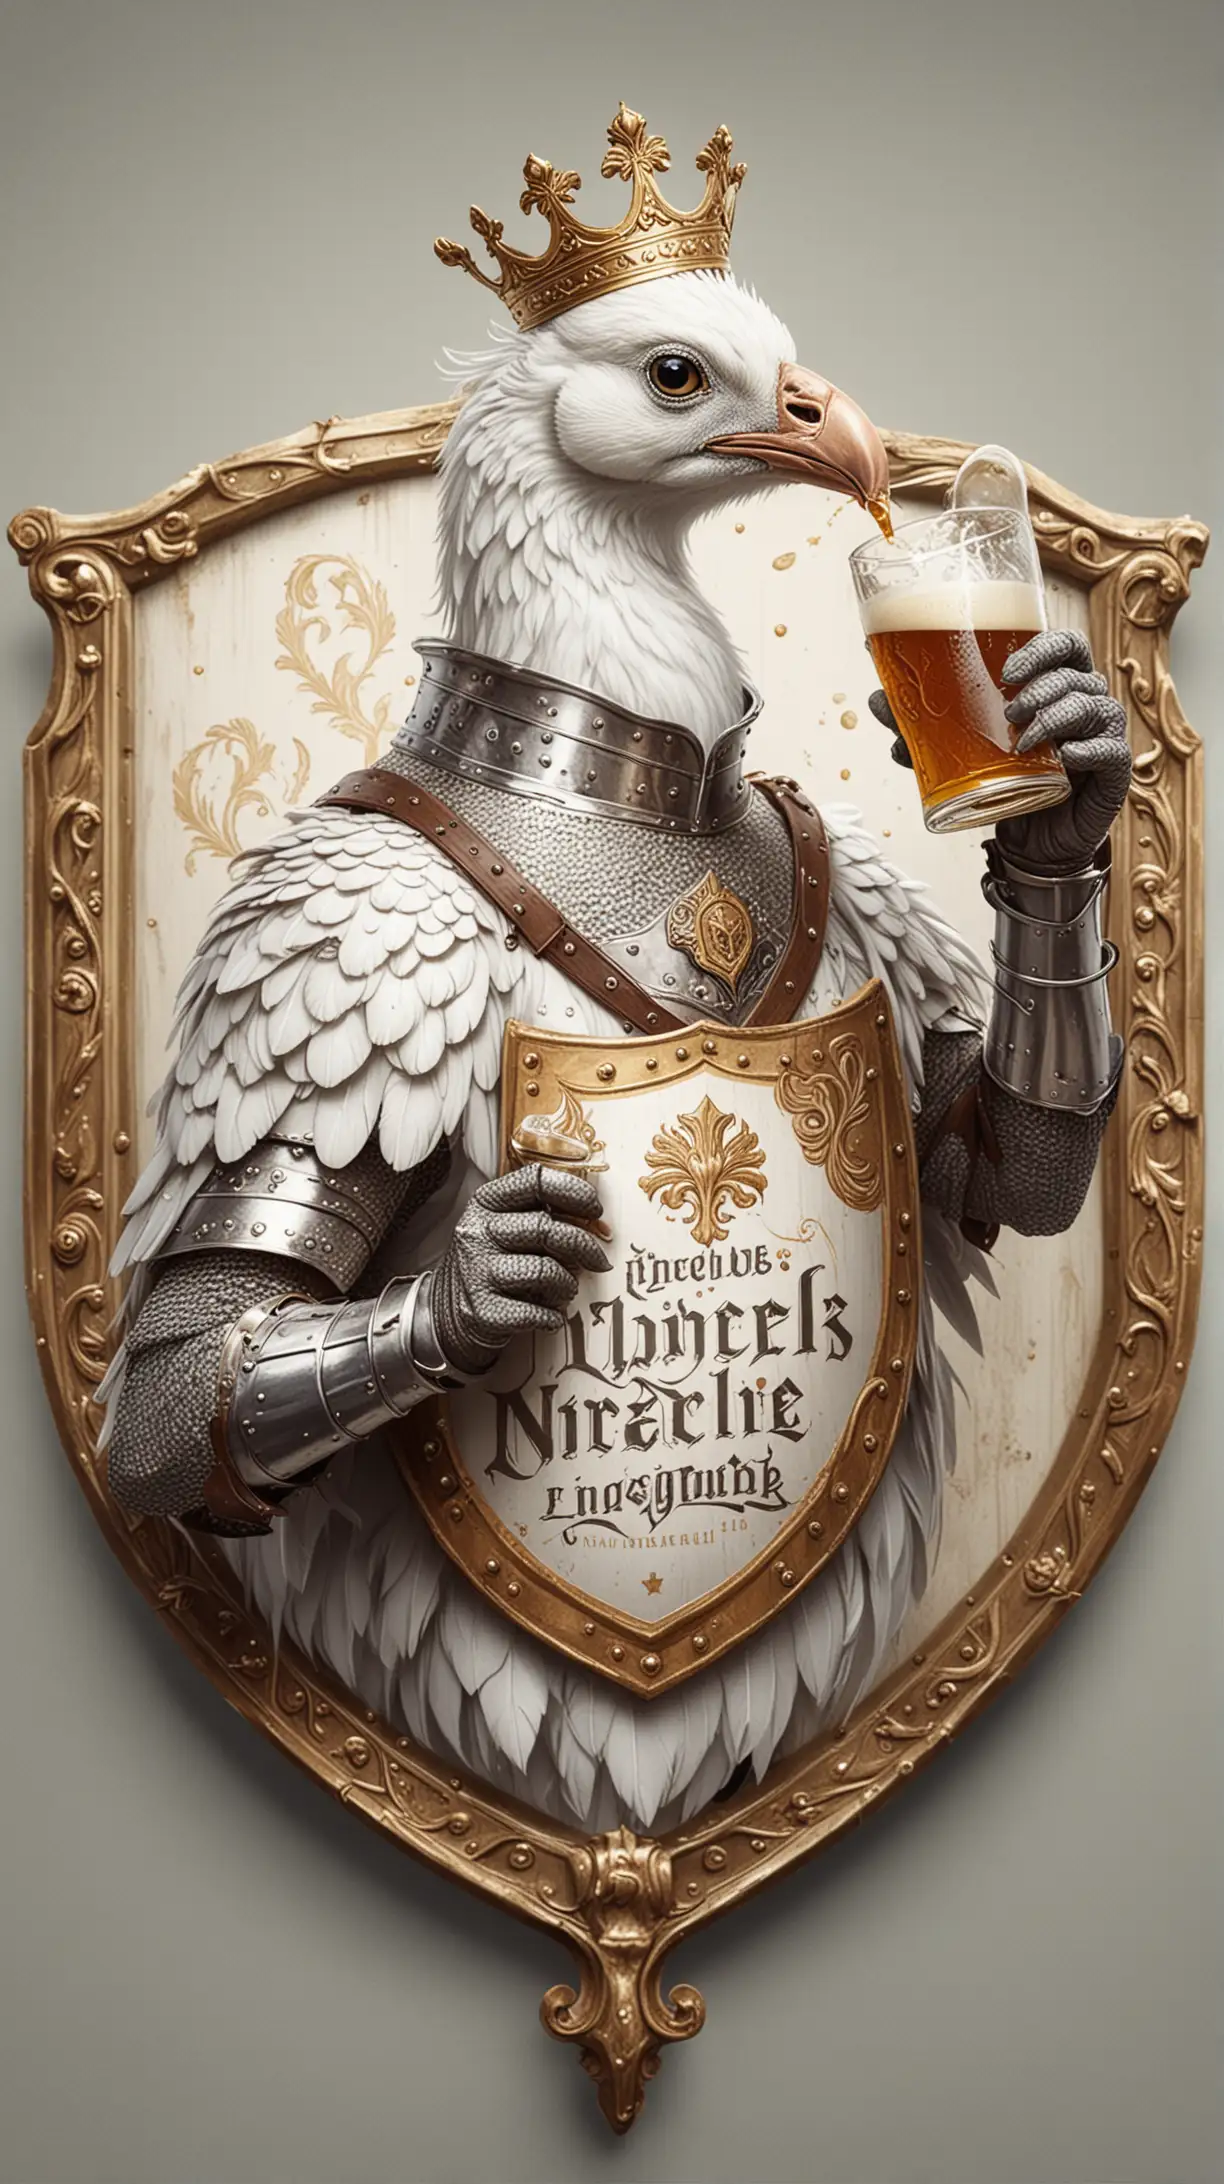 Witte Pauwen Noble White Peacock Knight Enjoying Beer on Shield